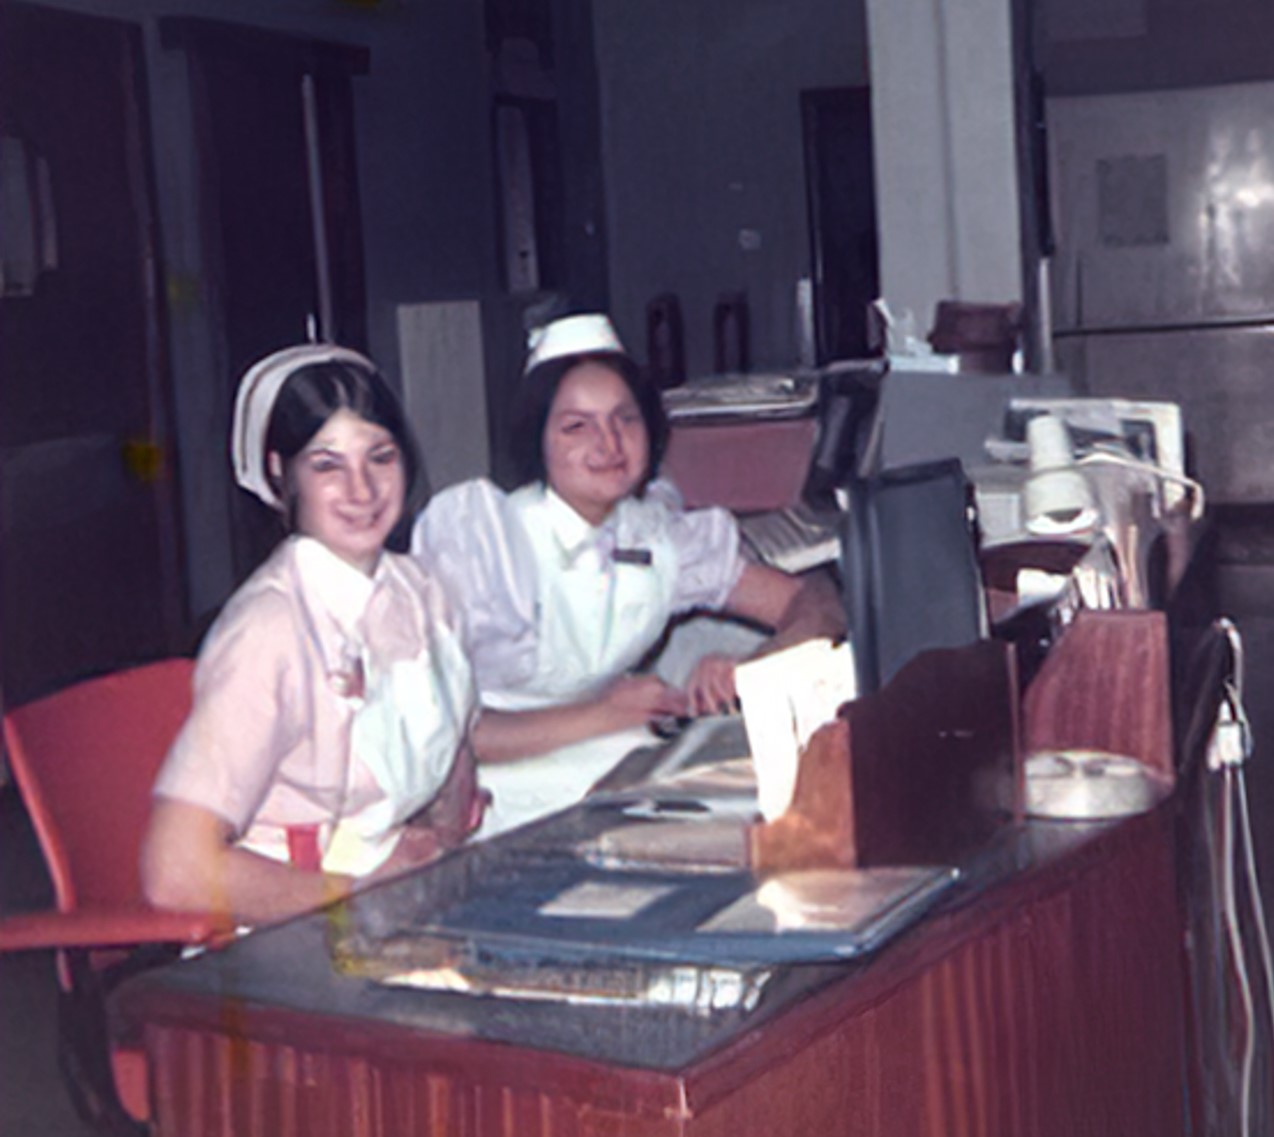 1974 Cotton Ward Student nurses London Hospital & Great Ormond St Hospital